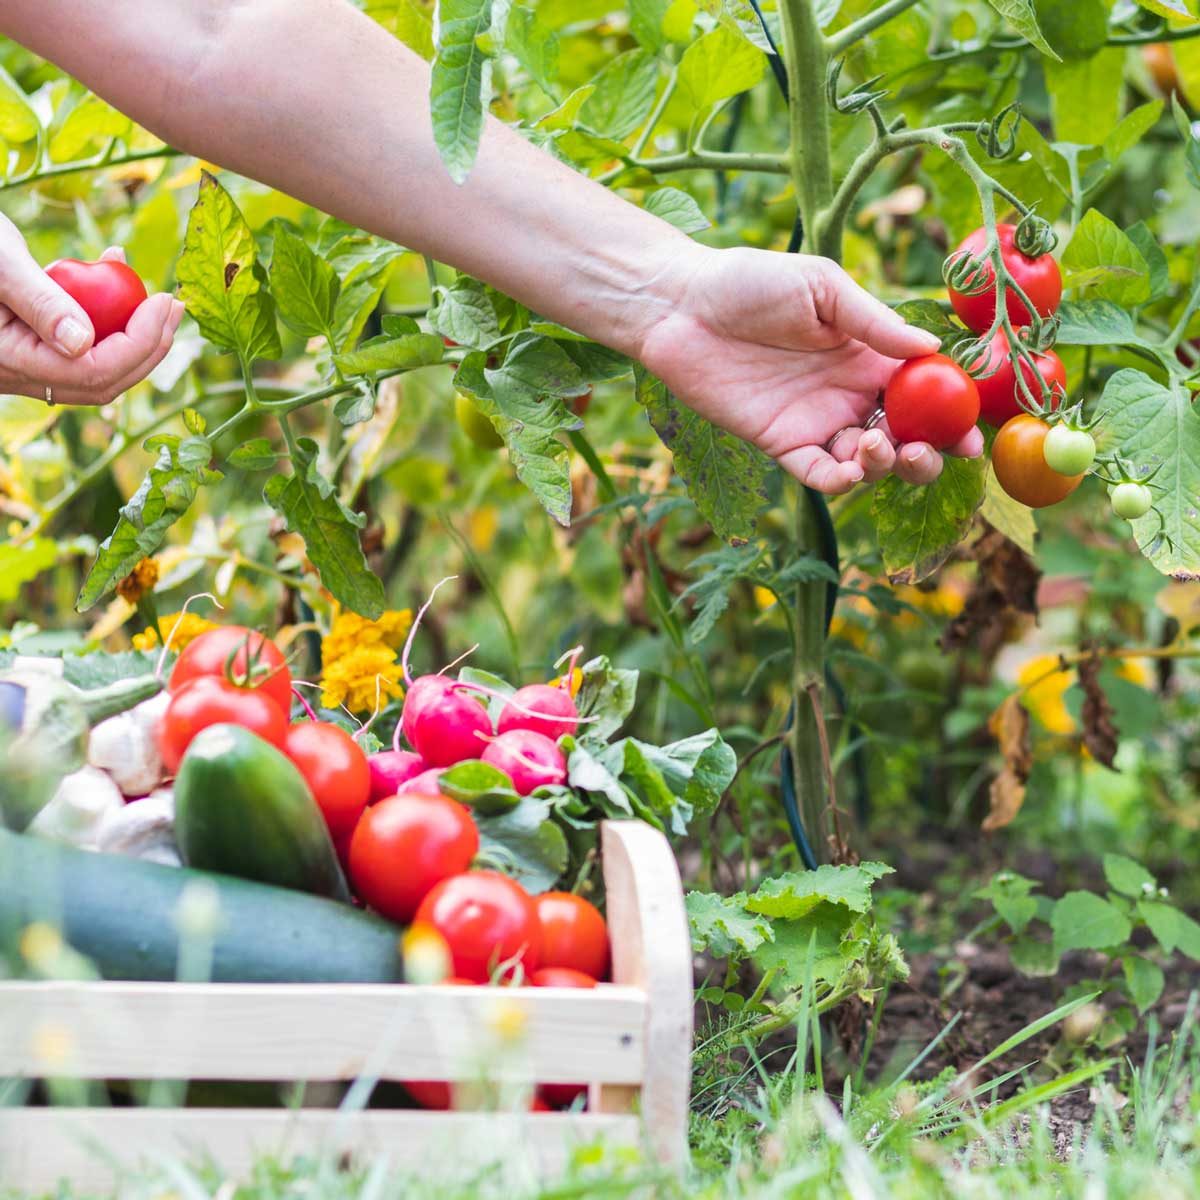 5 Common Mistakes In The Backyard Vegetable Garden | The Family Handyman